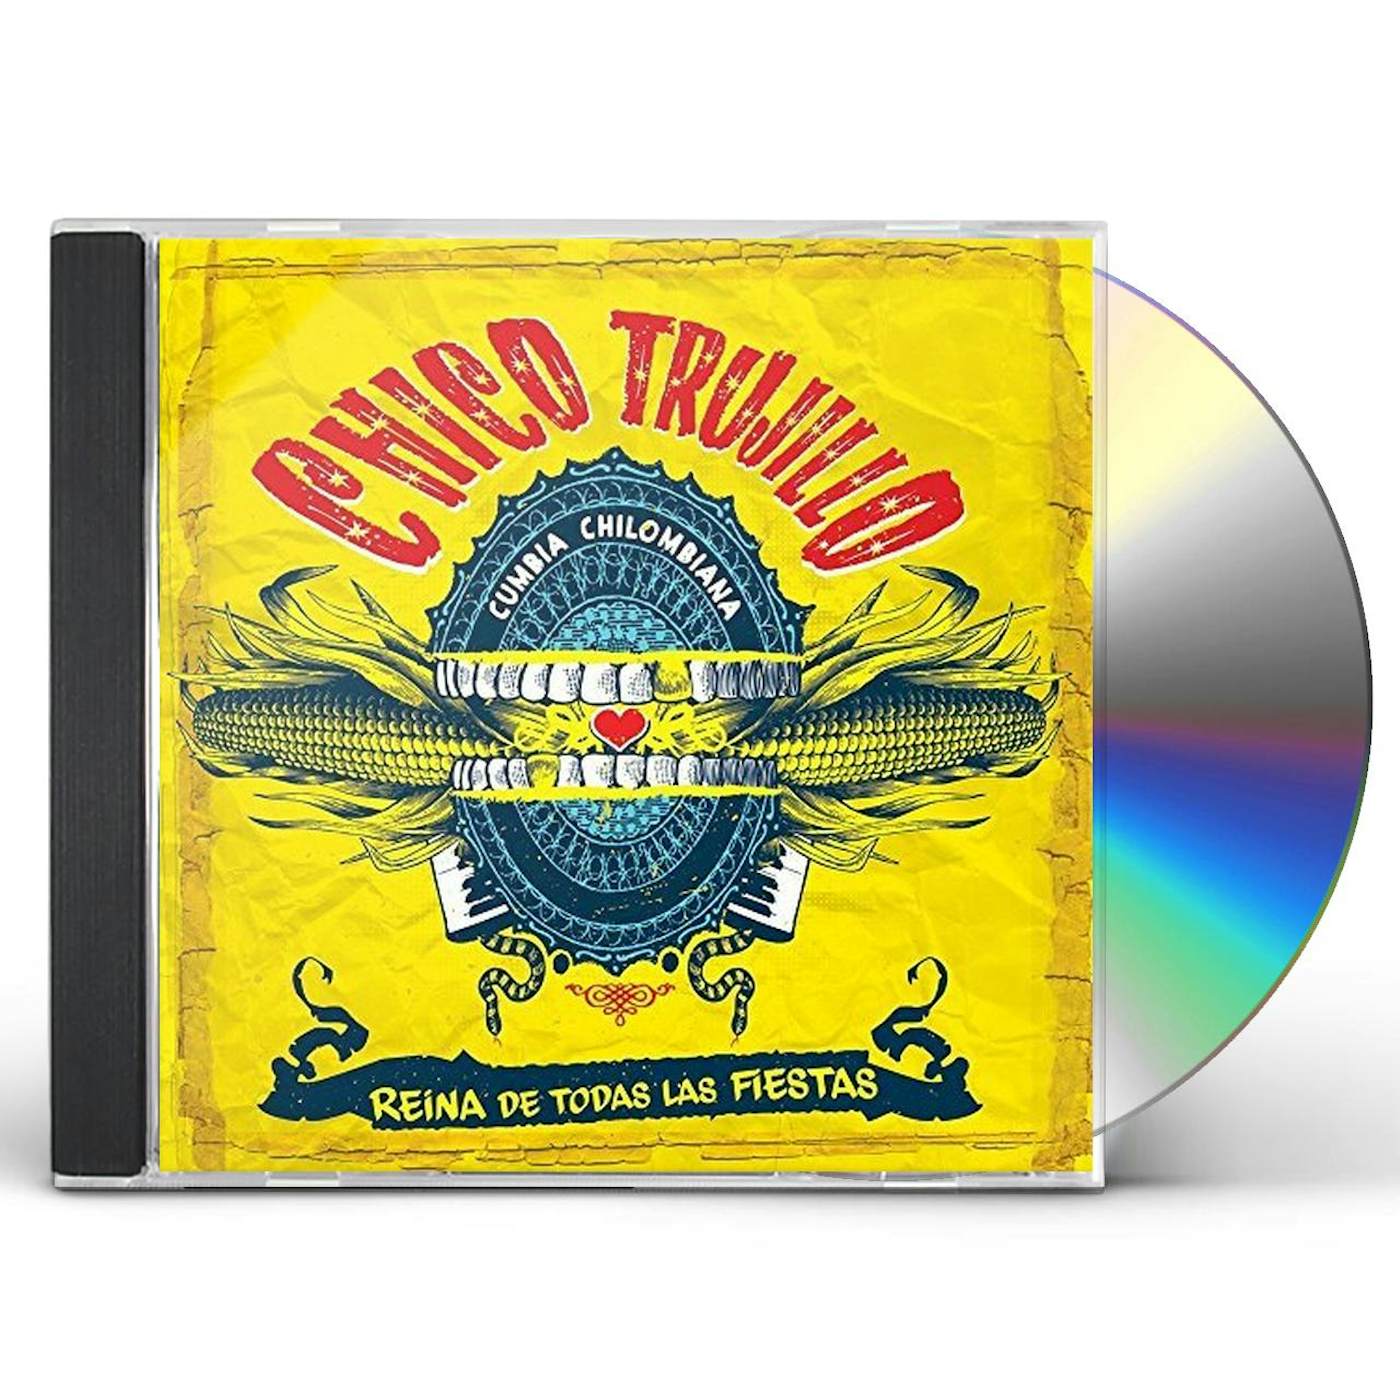 Chico Trujillo REINA DE TODAS LAS FIESTAS CD